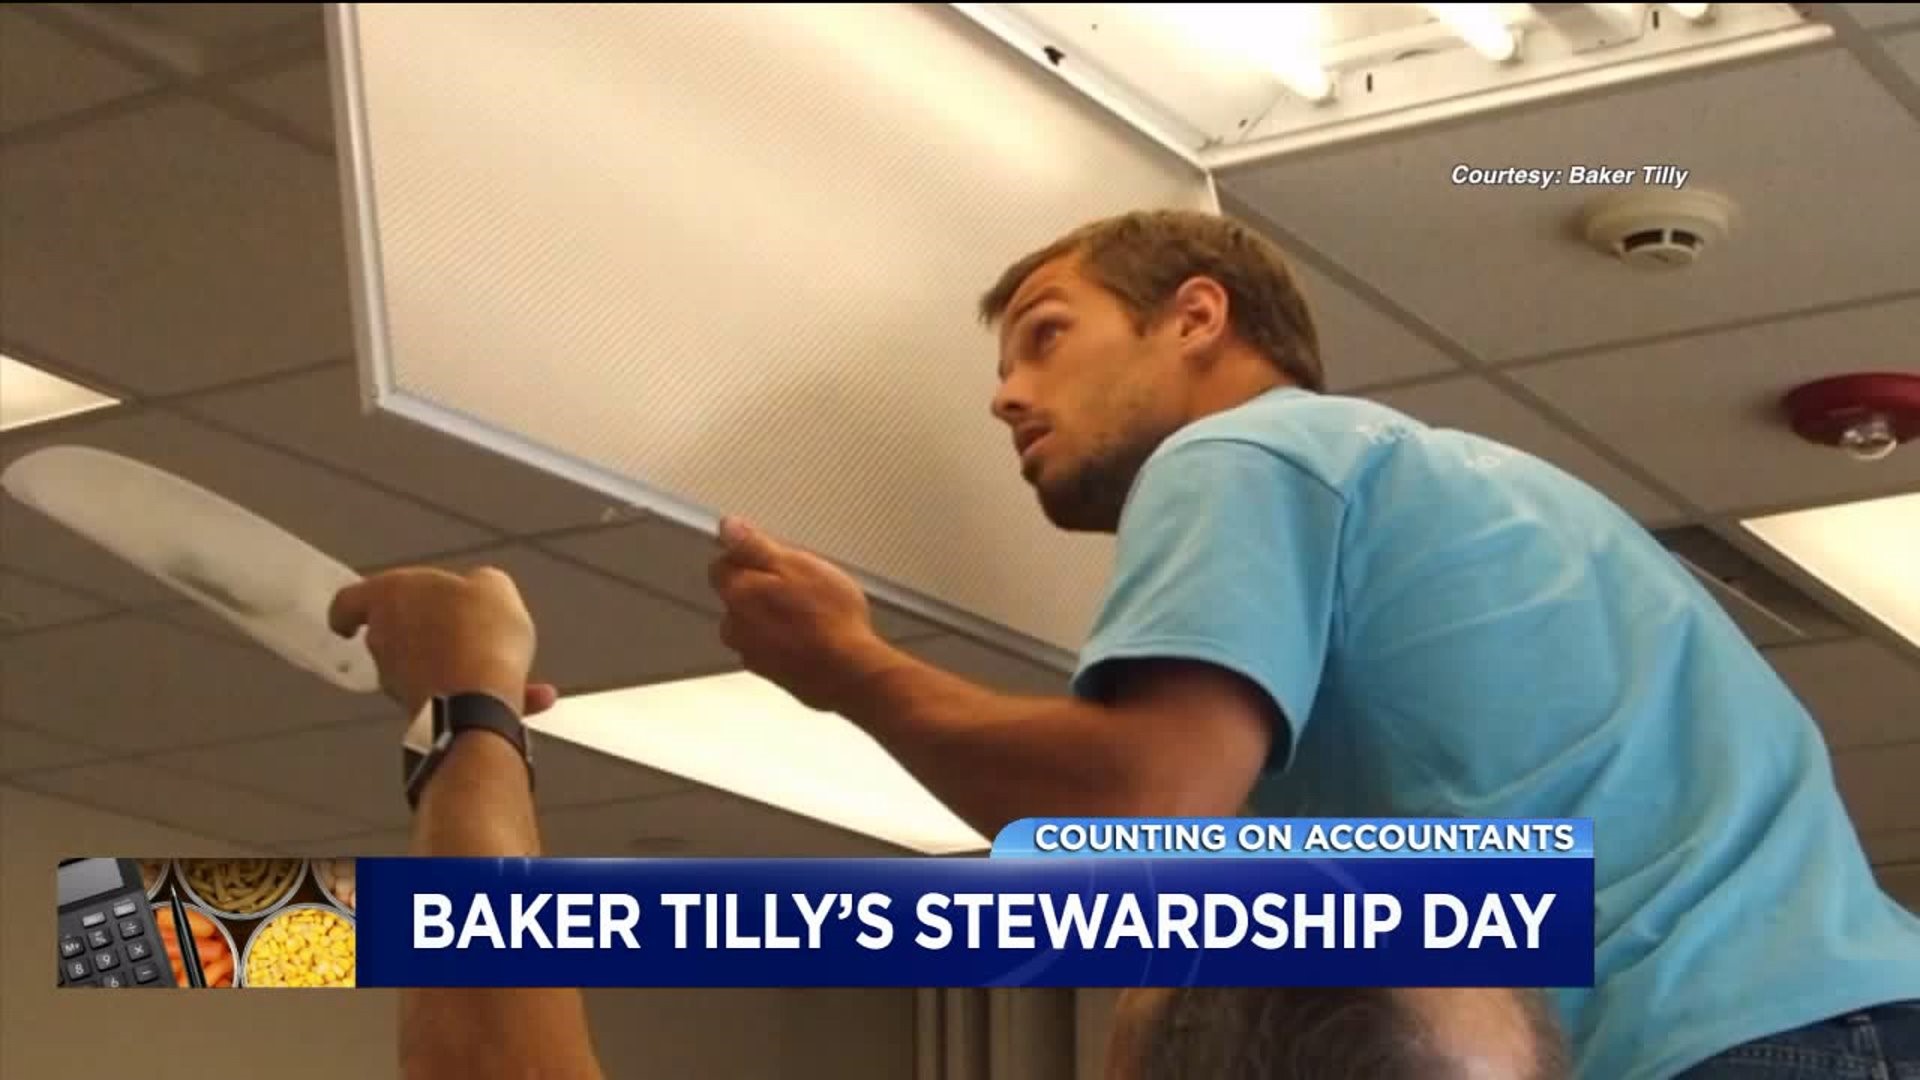 Baker Tilly's Stewardship Day